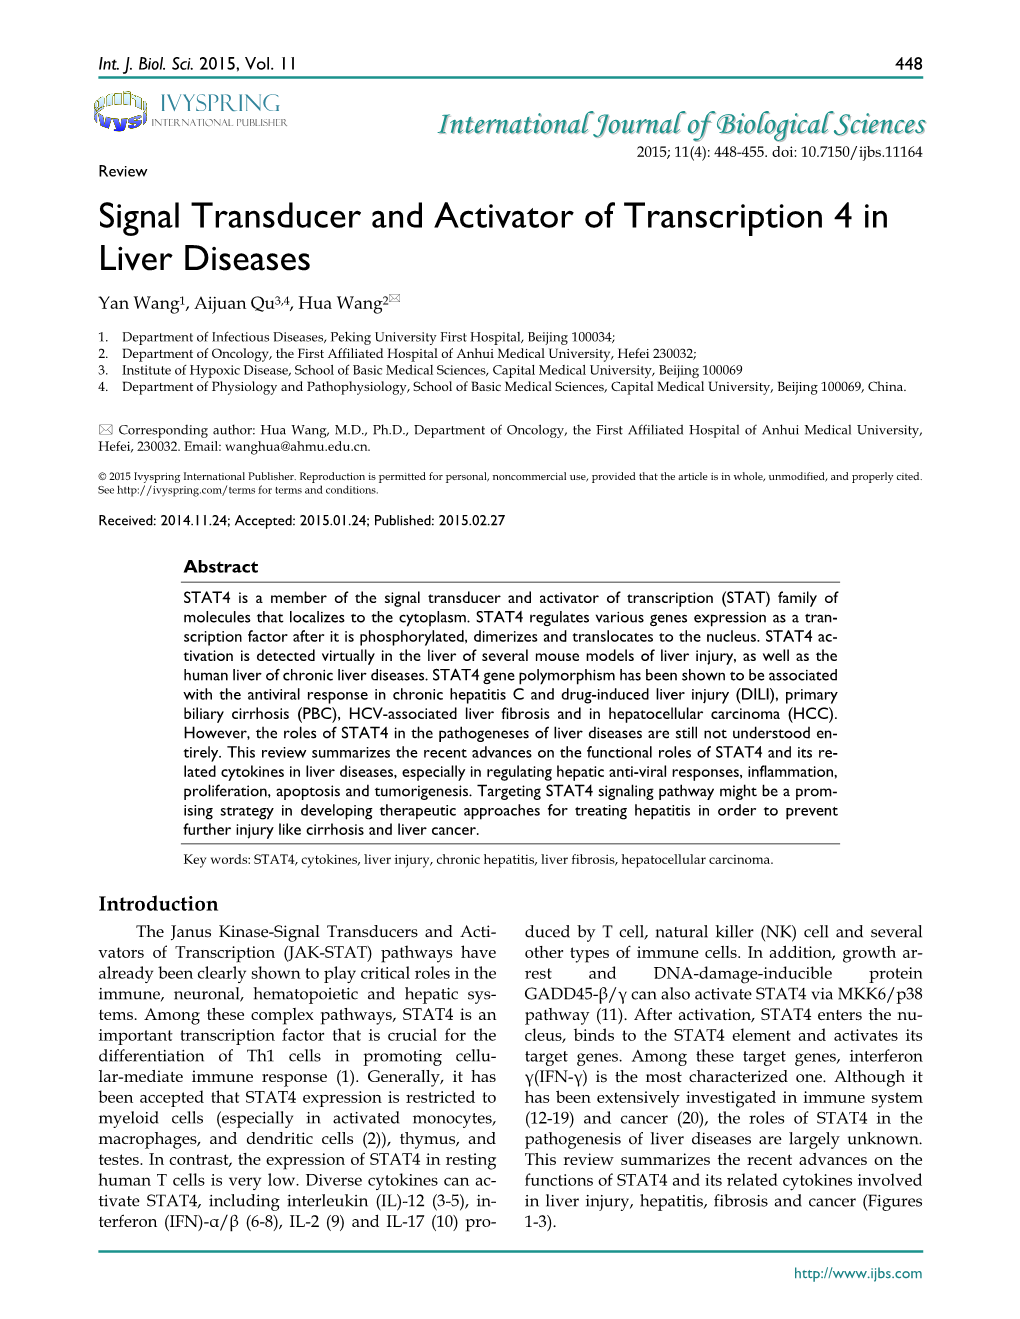 Signal Transducer and Activator of Transcription 4 in Liver Diseases Yan Wang1, Aijuan Qu3,4, Hua Wang2